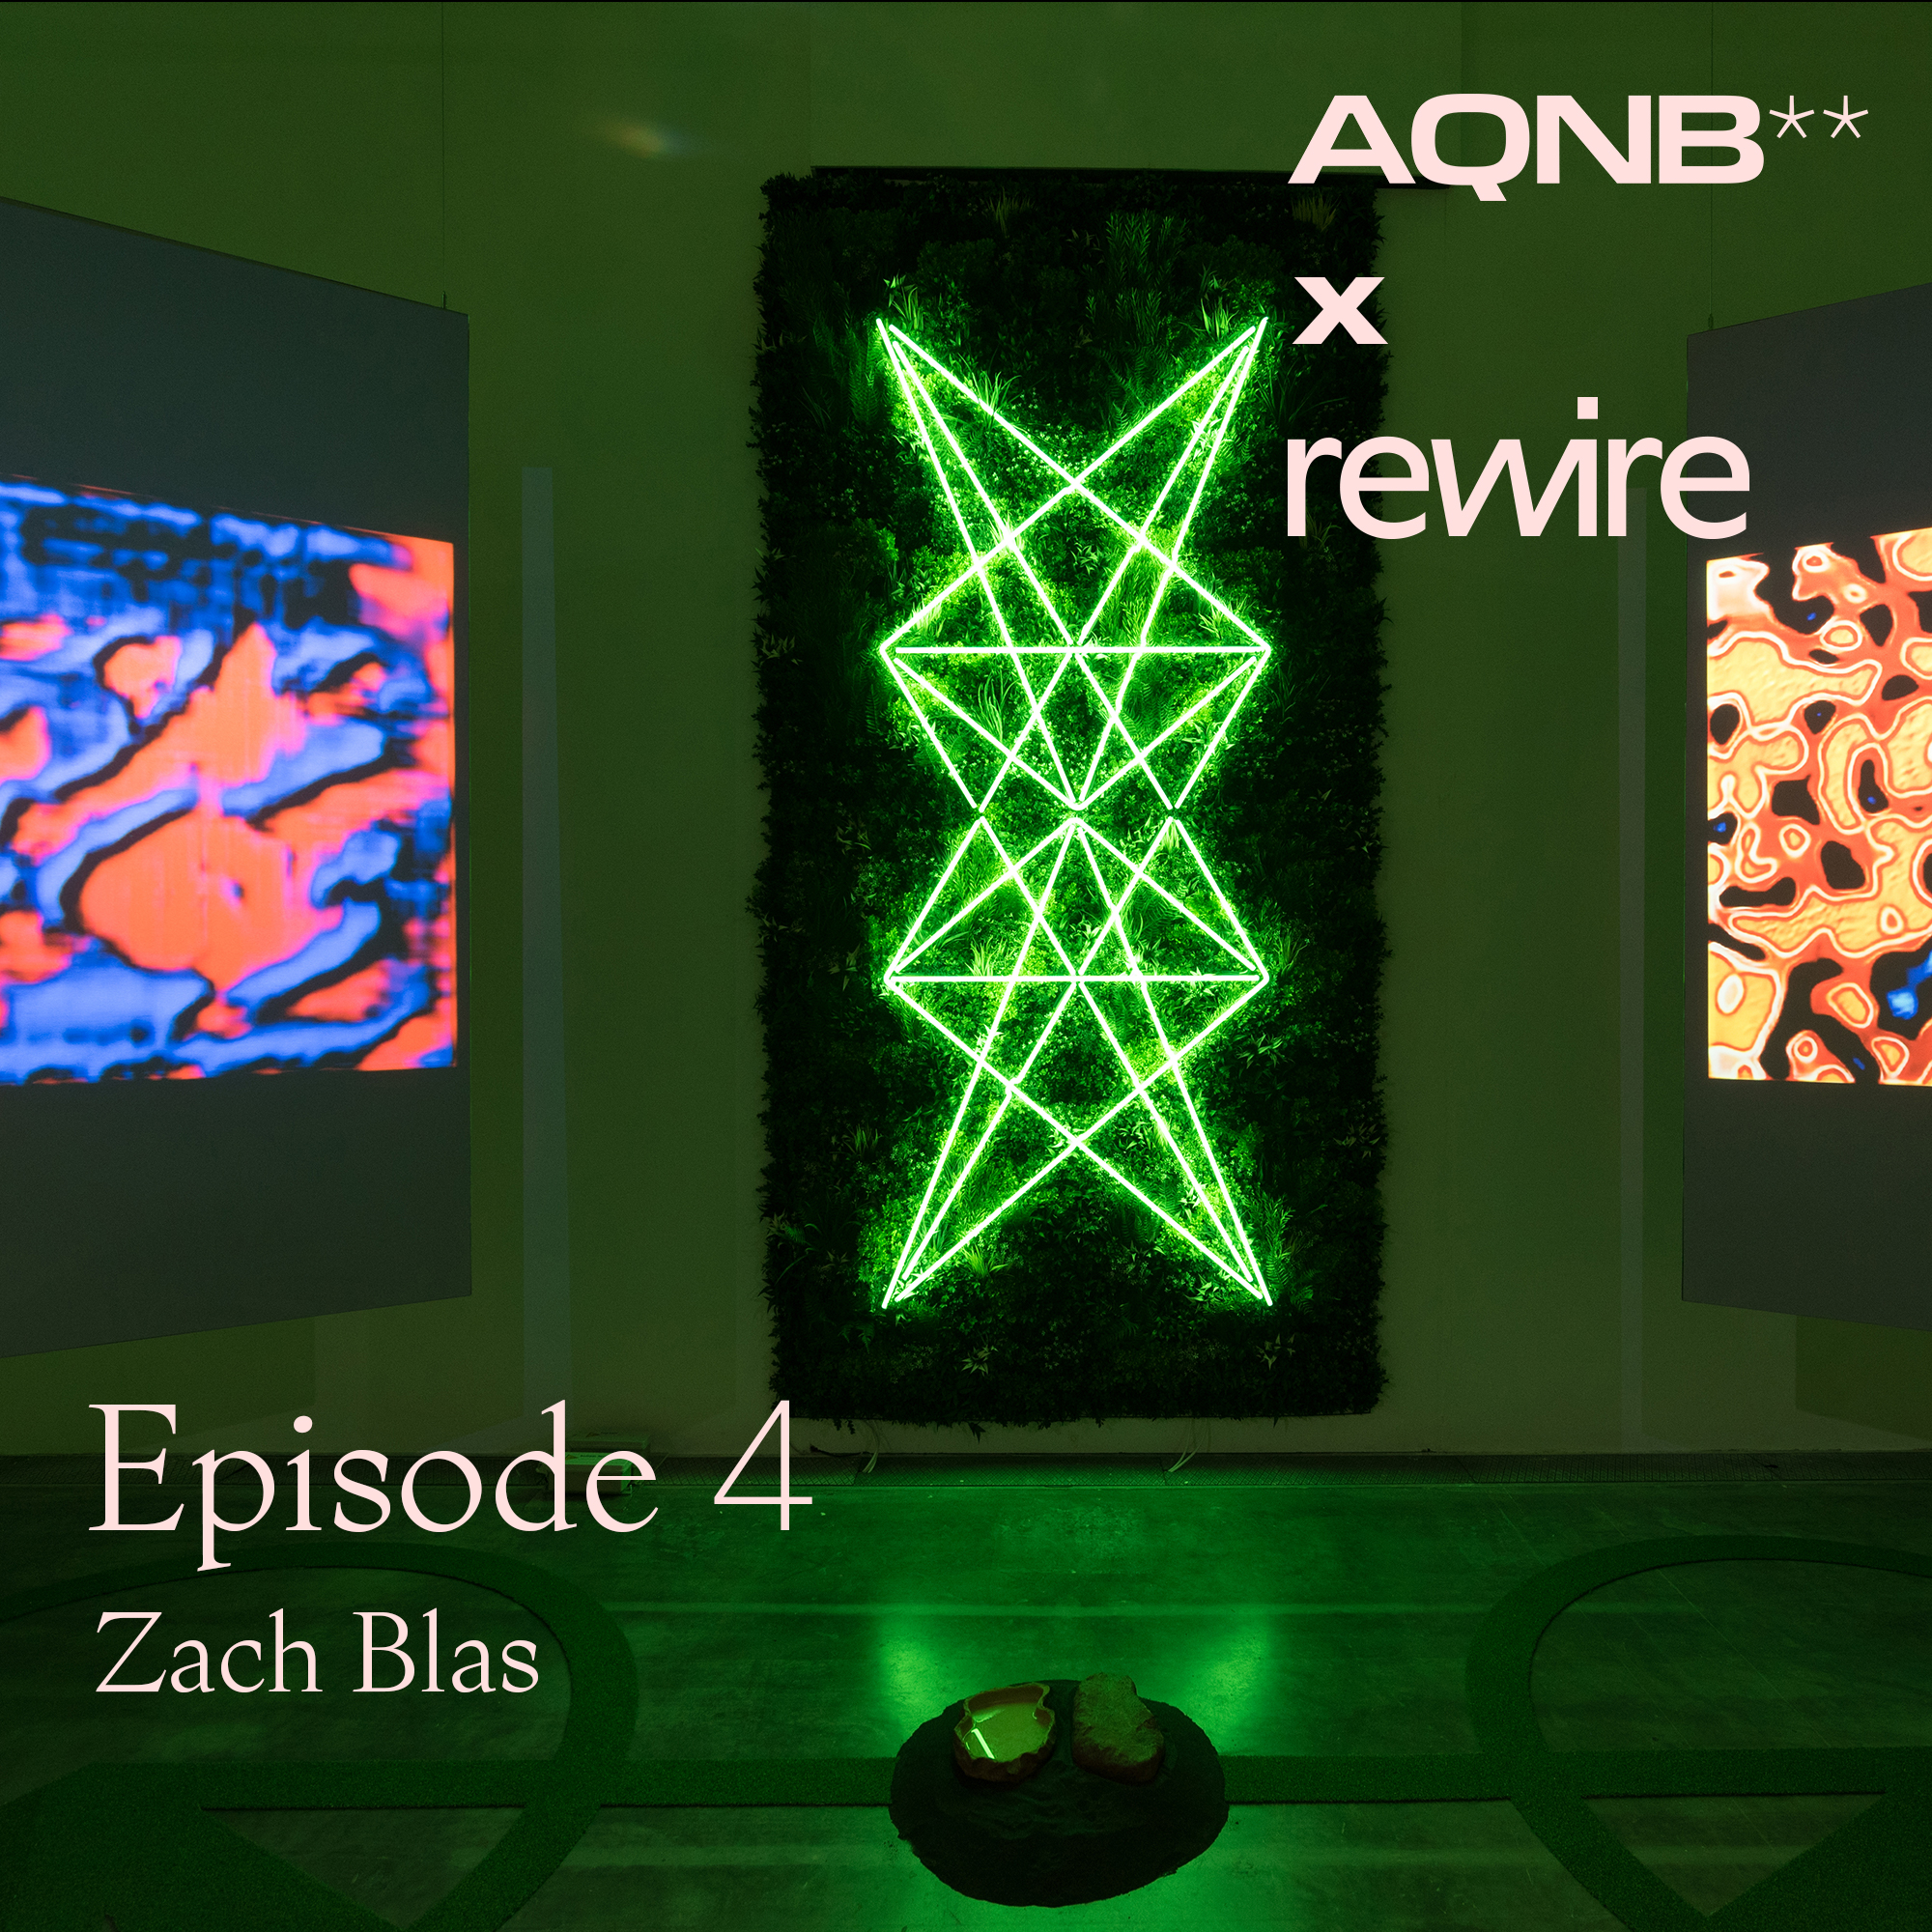 AQNB x rewire: Reversal Agents, Episode 4